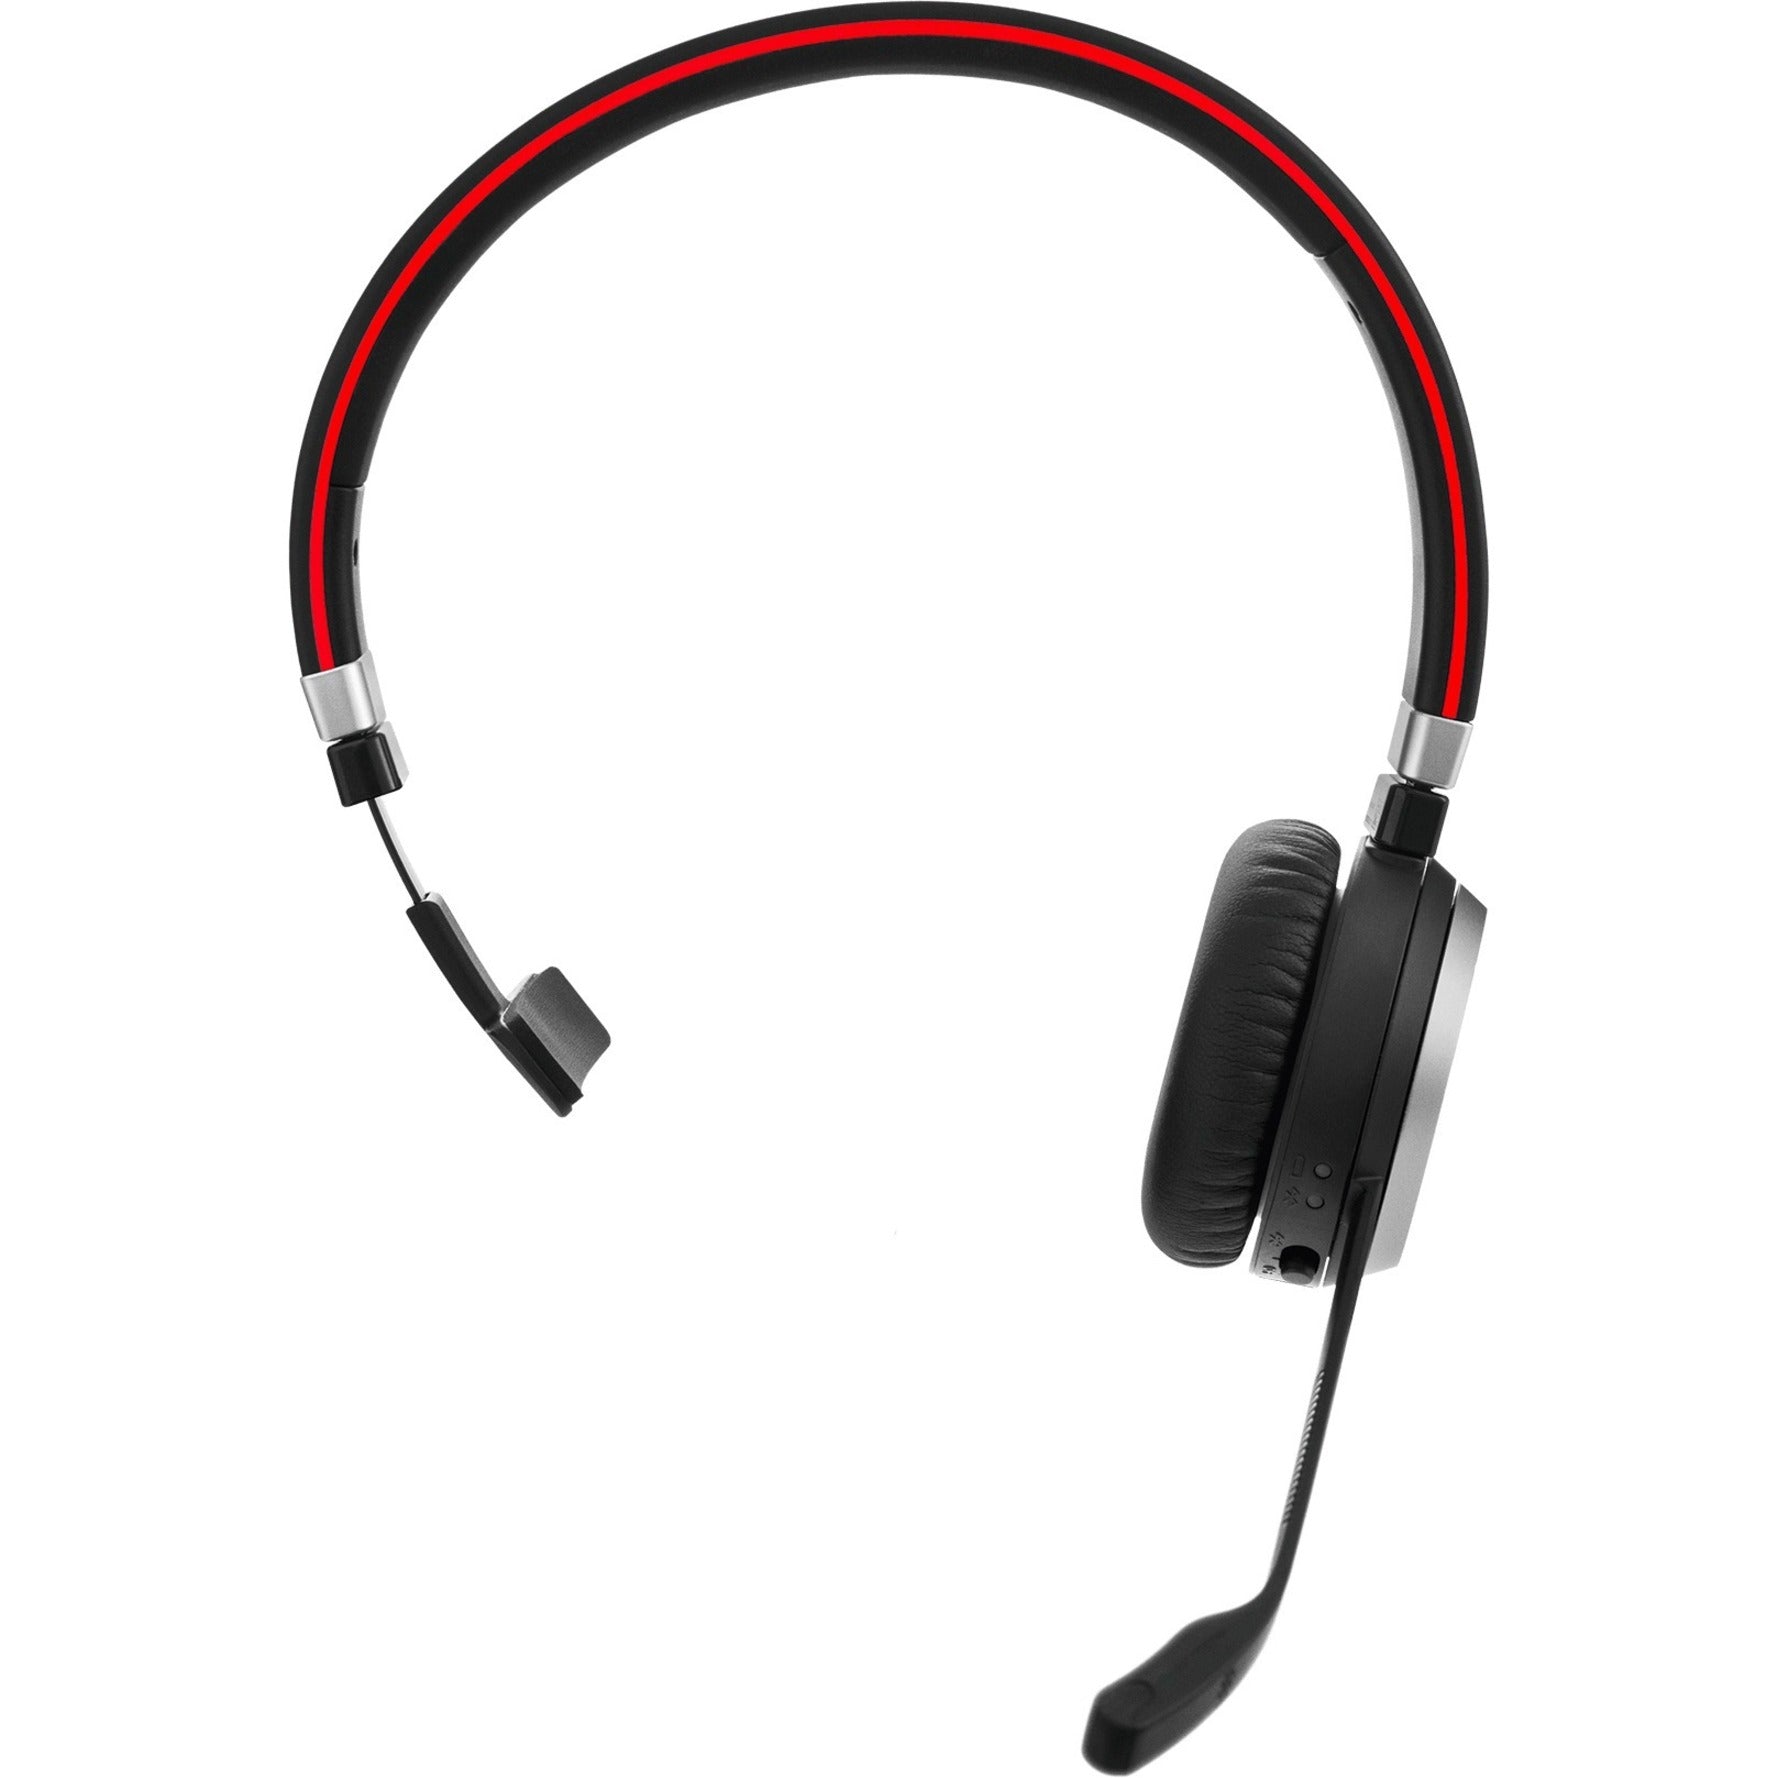 Jabra 6593-839-409 Evolve 65 Headset, Wireless Bluetooth 4.0, Noise Cancelling, Binaural Over-the-head Design